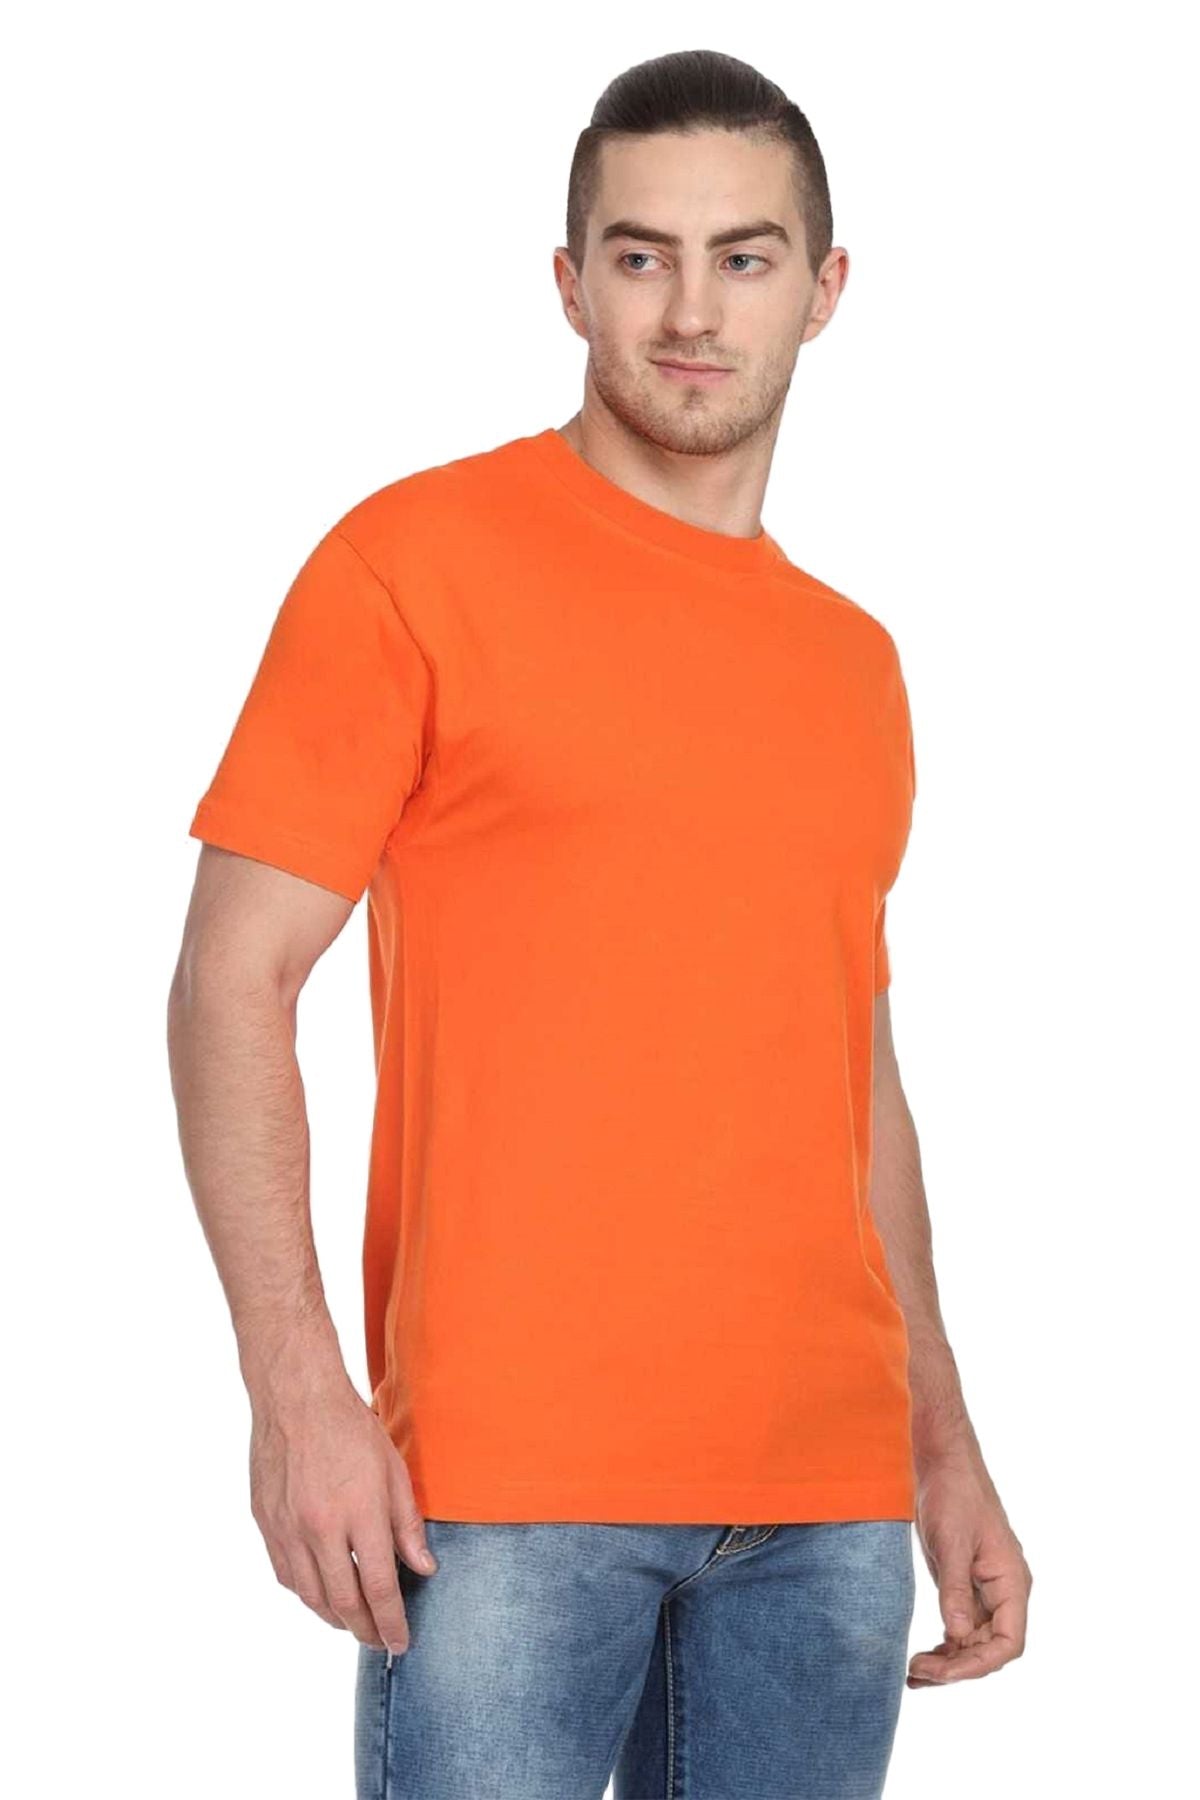 Multus  Mens Solid Round Neck Polyester White T-shirt Pack Of 2  Orange  Blue